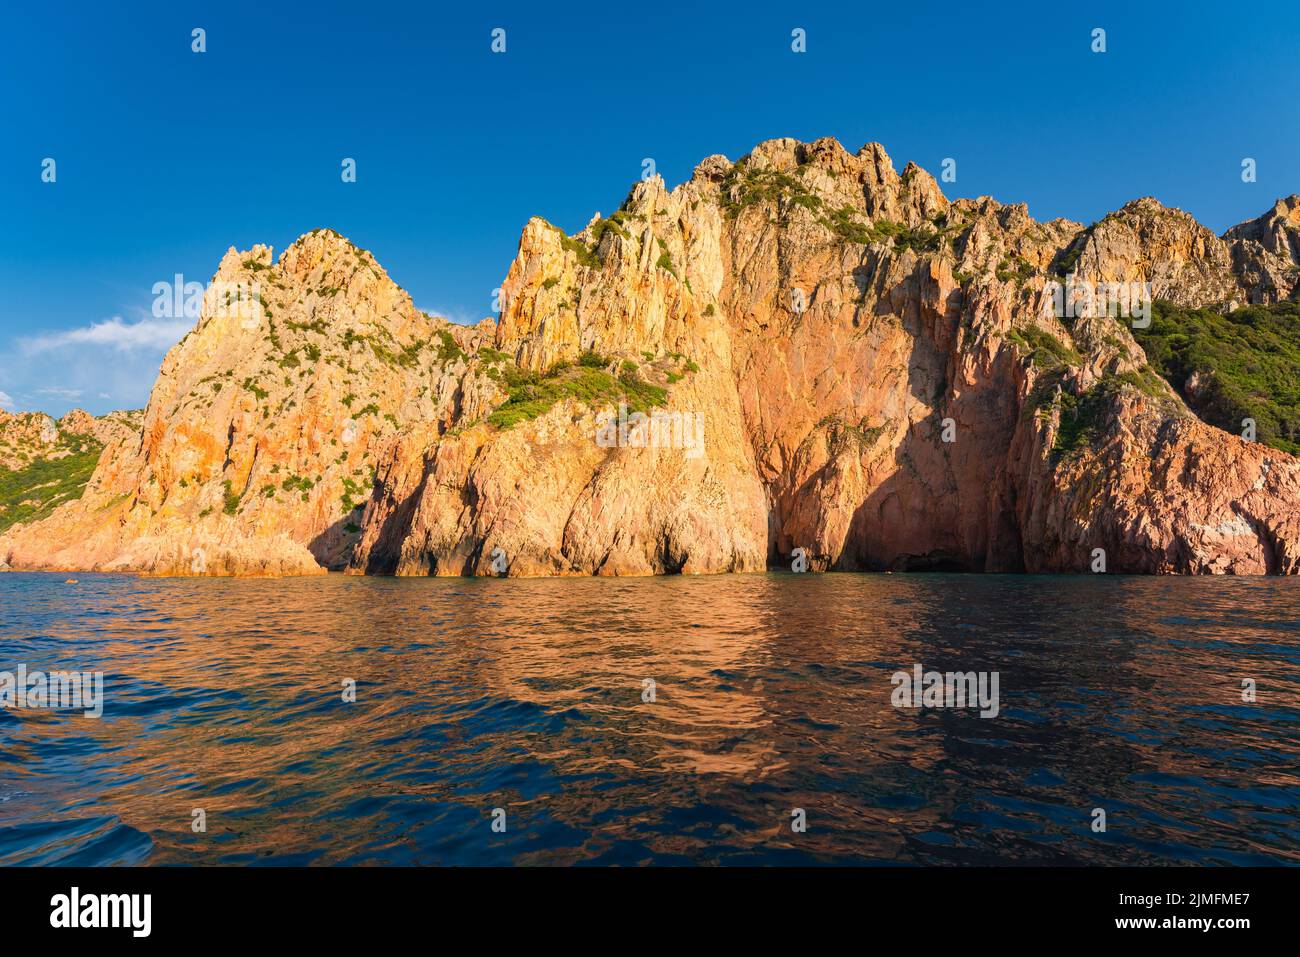 Scandola Natural Reserve, Corsica Island. Seascape, south France Stock Photo